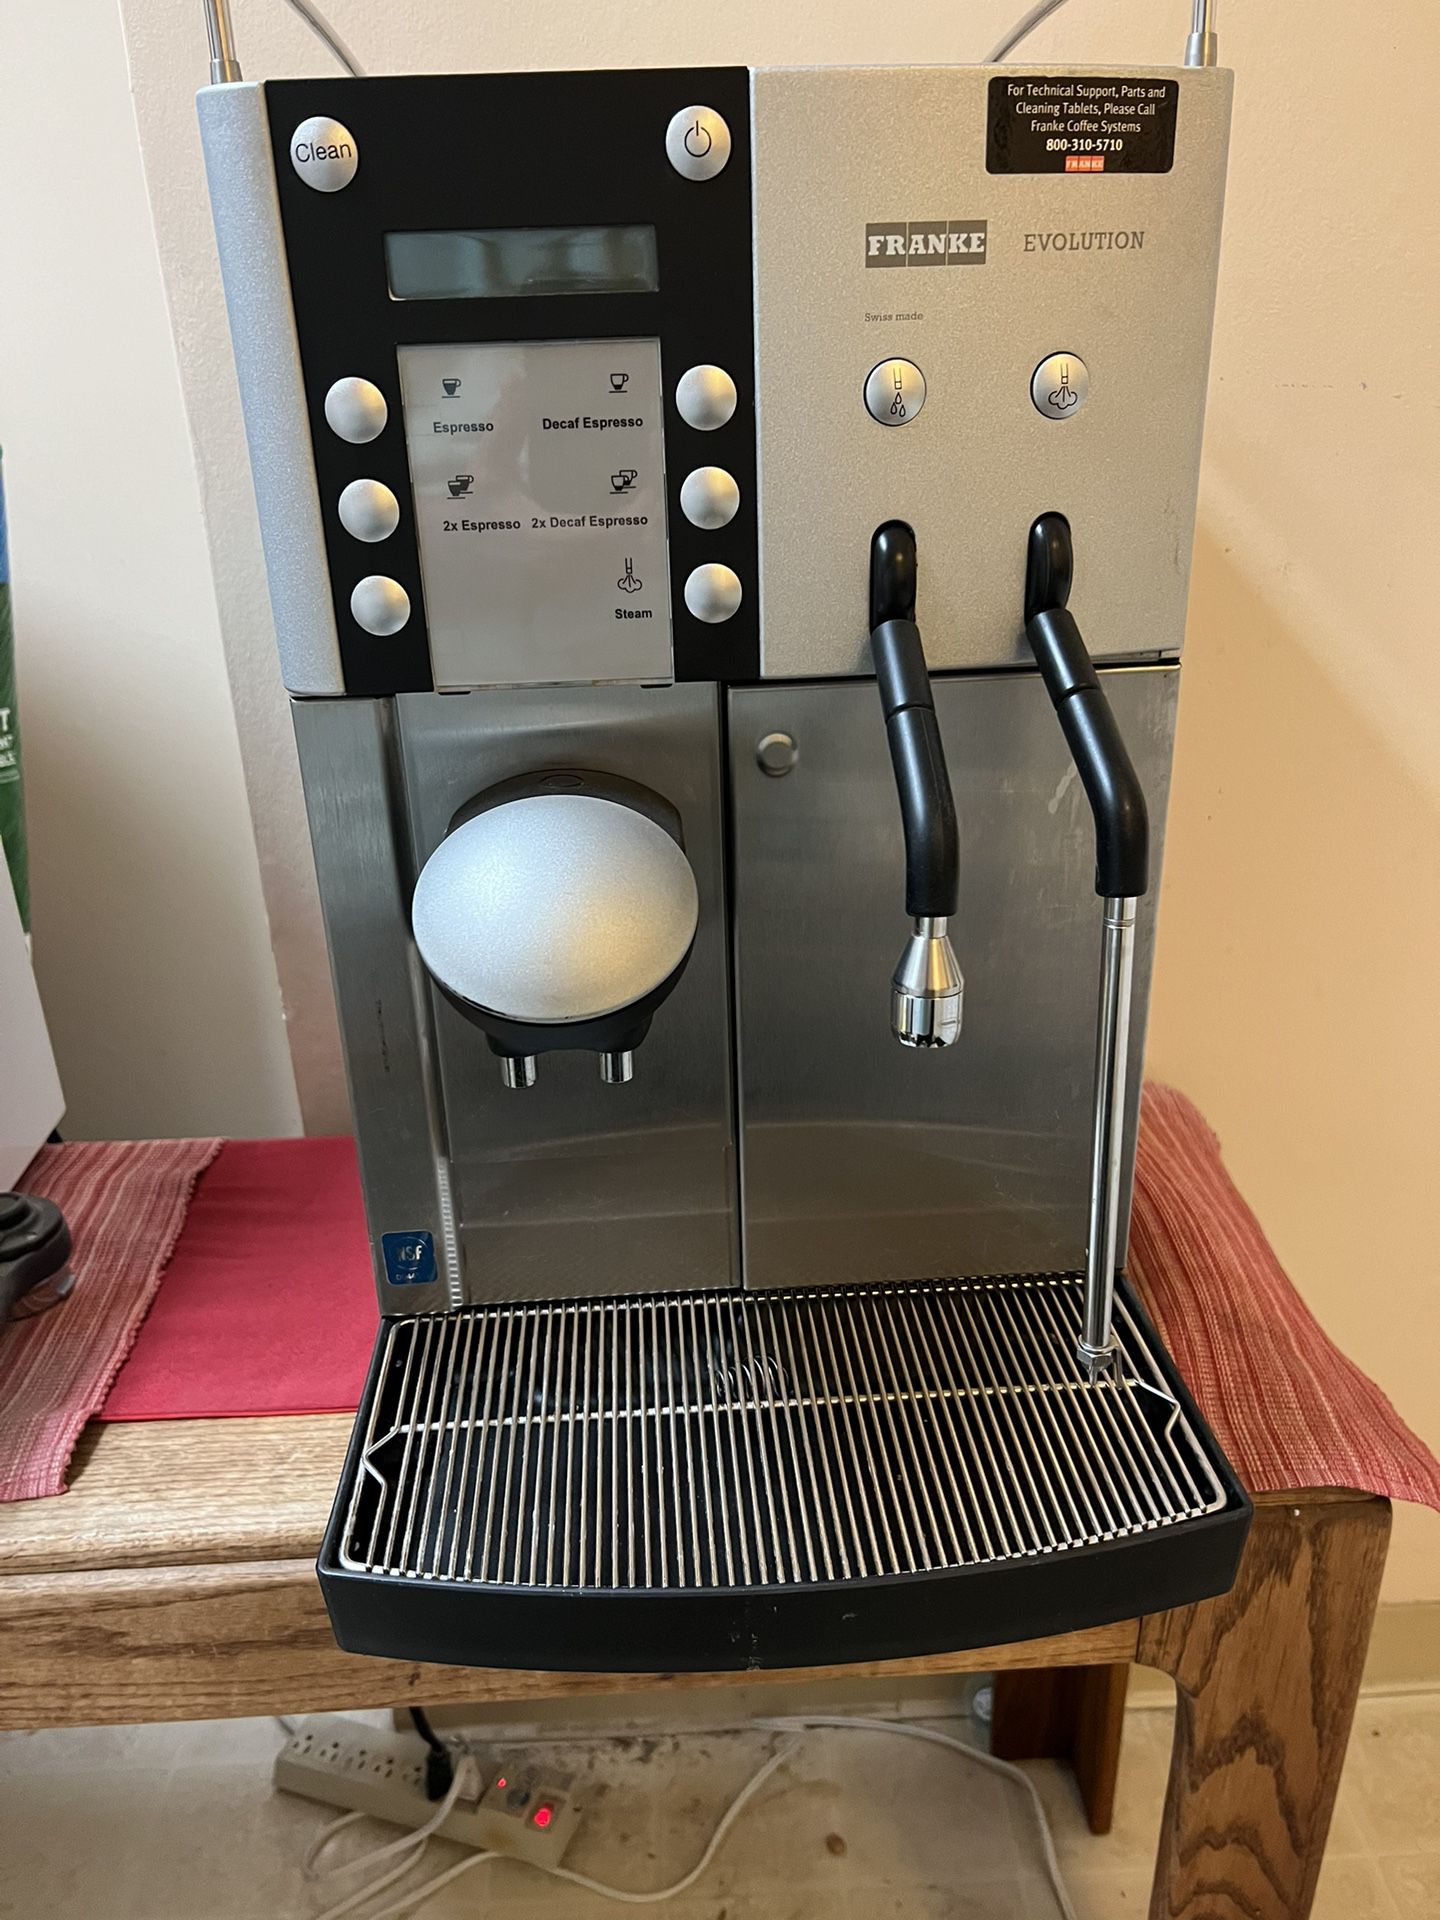 Franke Evolution Automatic Espresso Machine